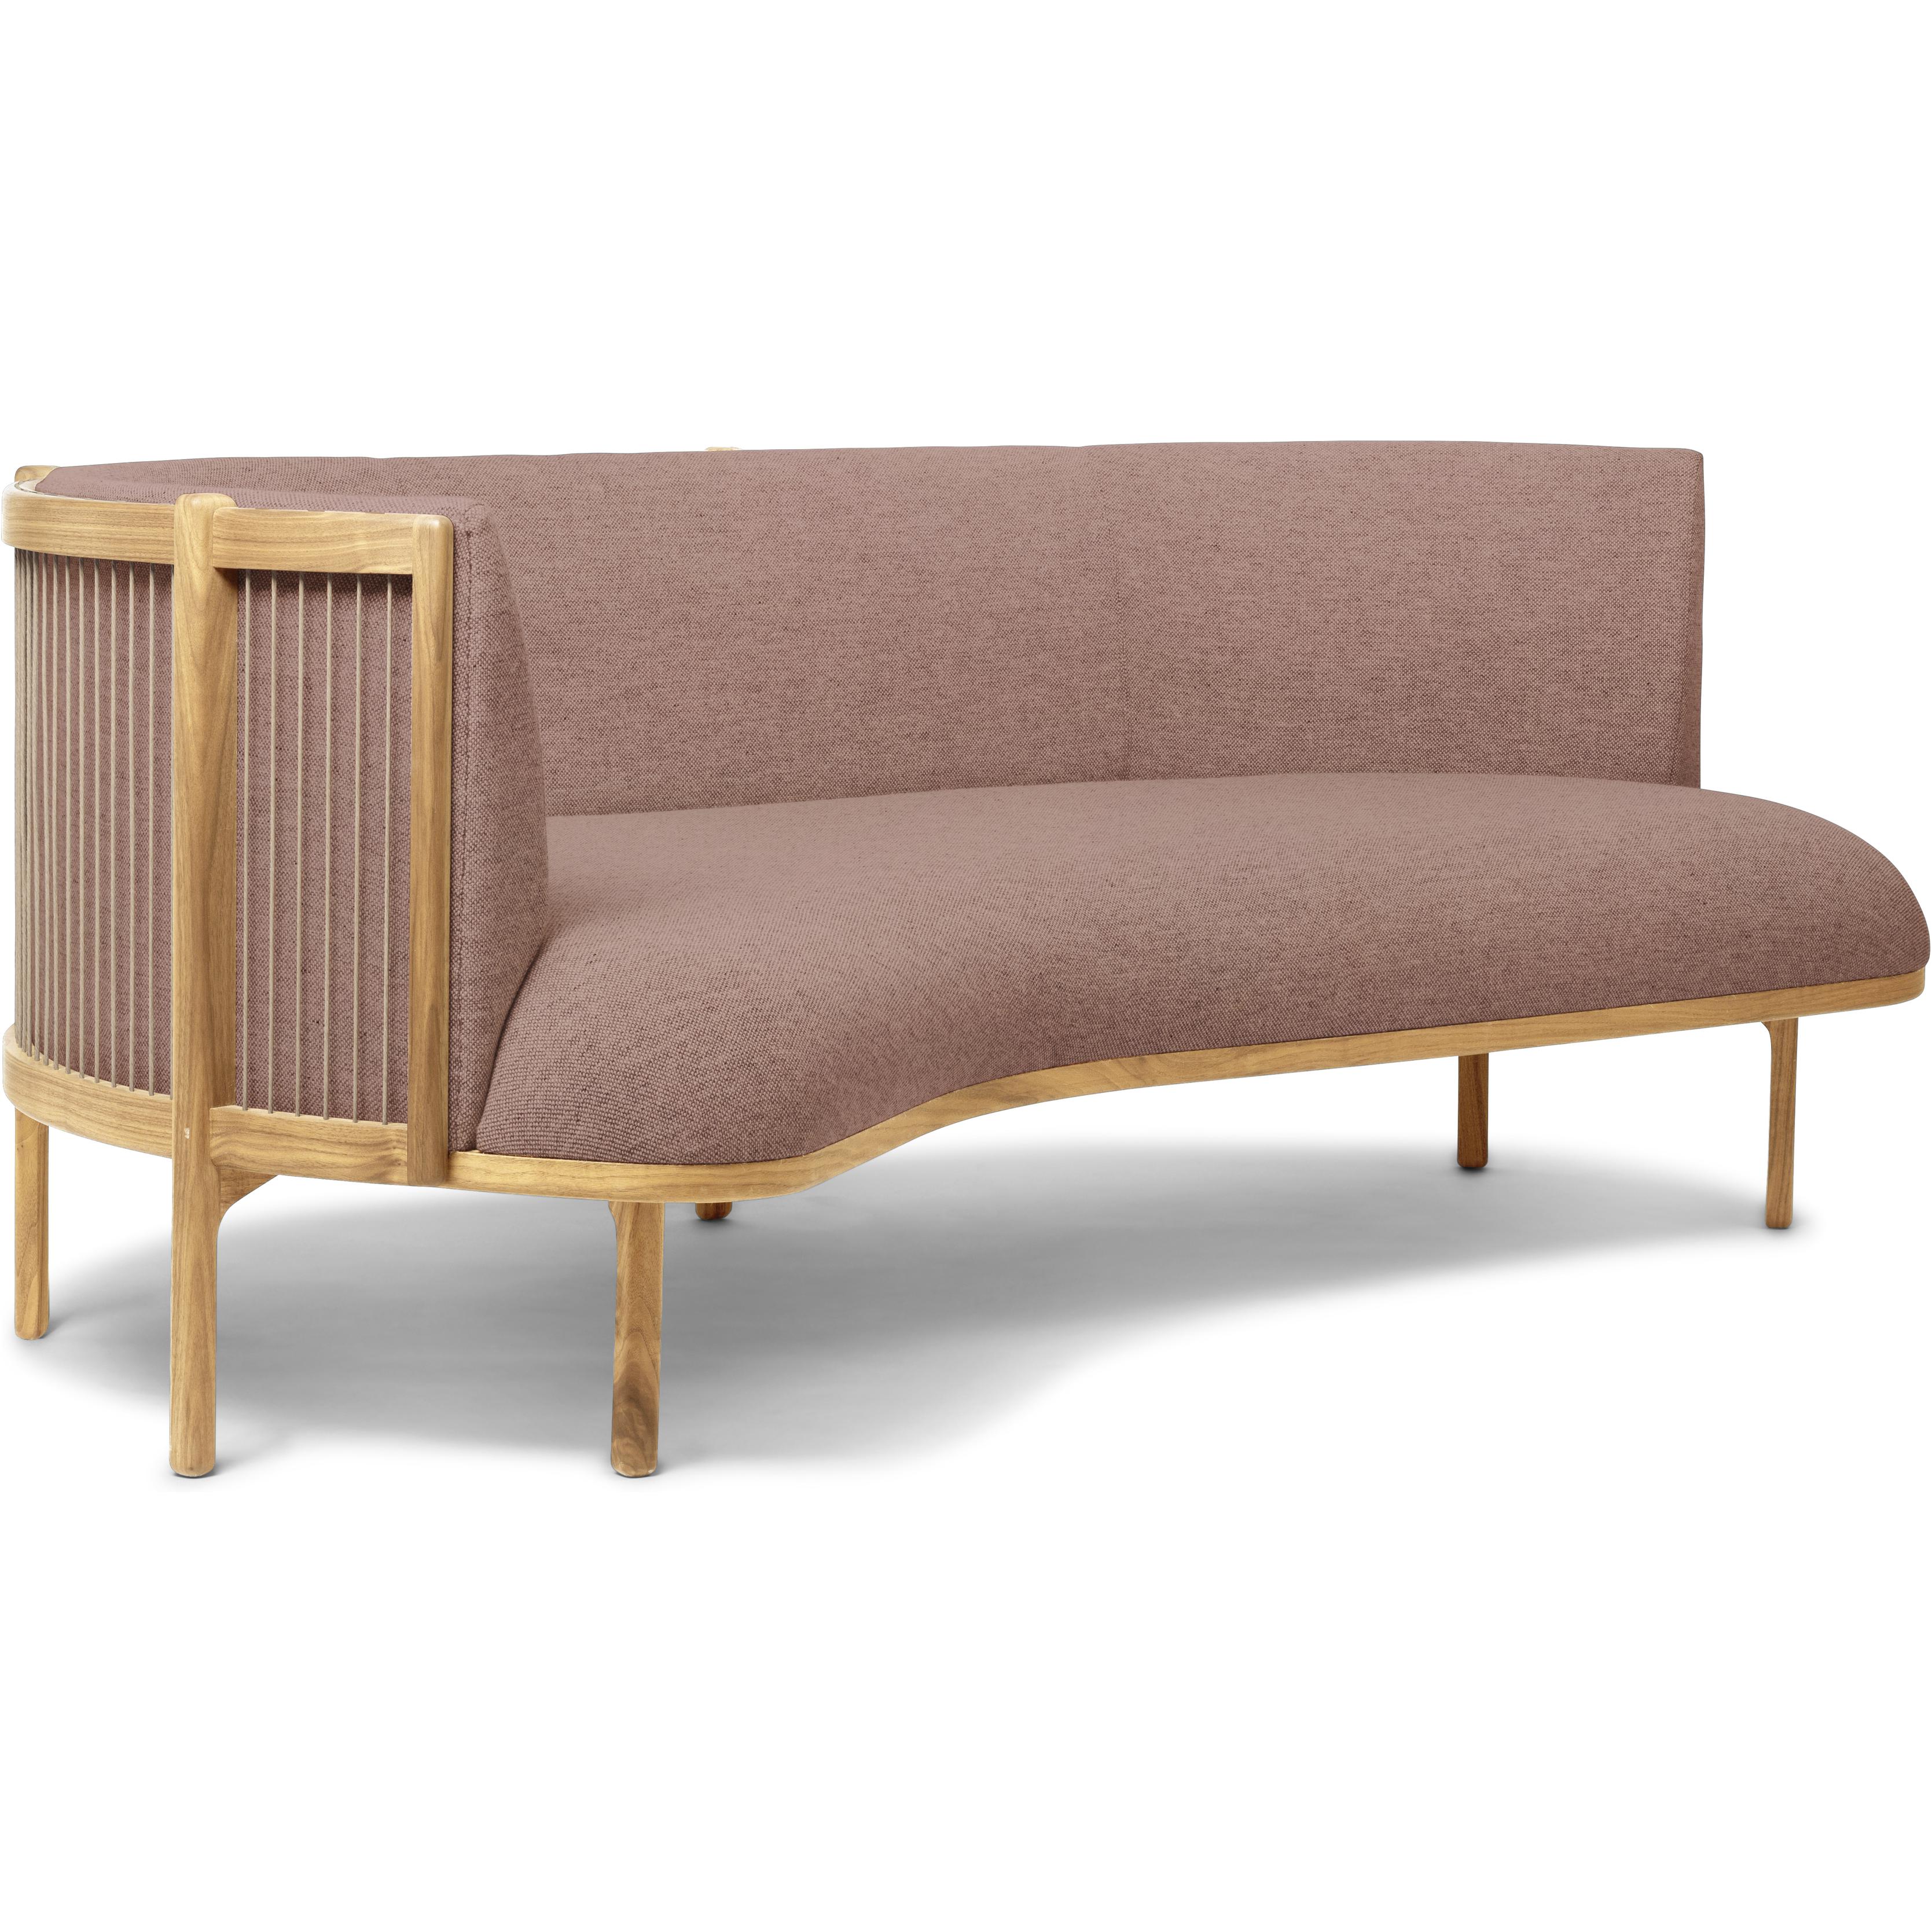 Carl Hansen RF1903 L Sidevays soffa 3 Seeater Left Oak Oil/Fiord Tyg, Pink/Natural Brown